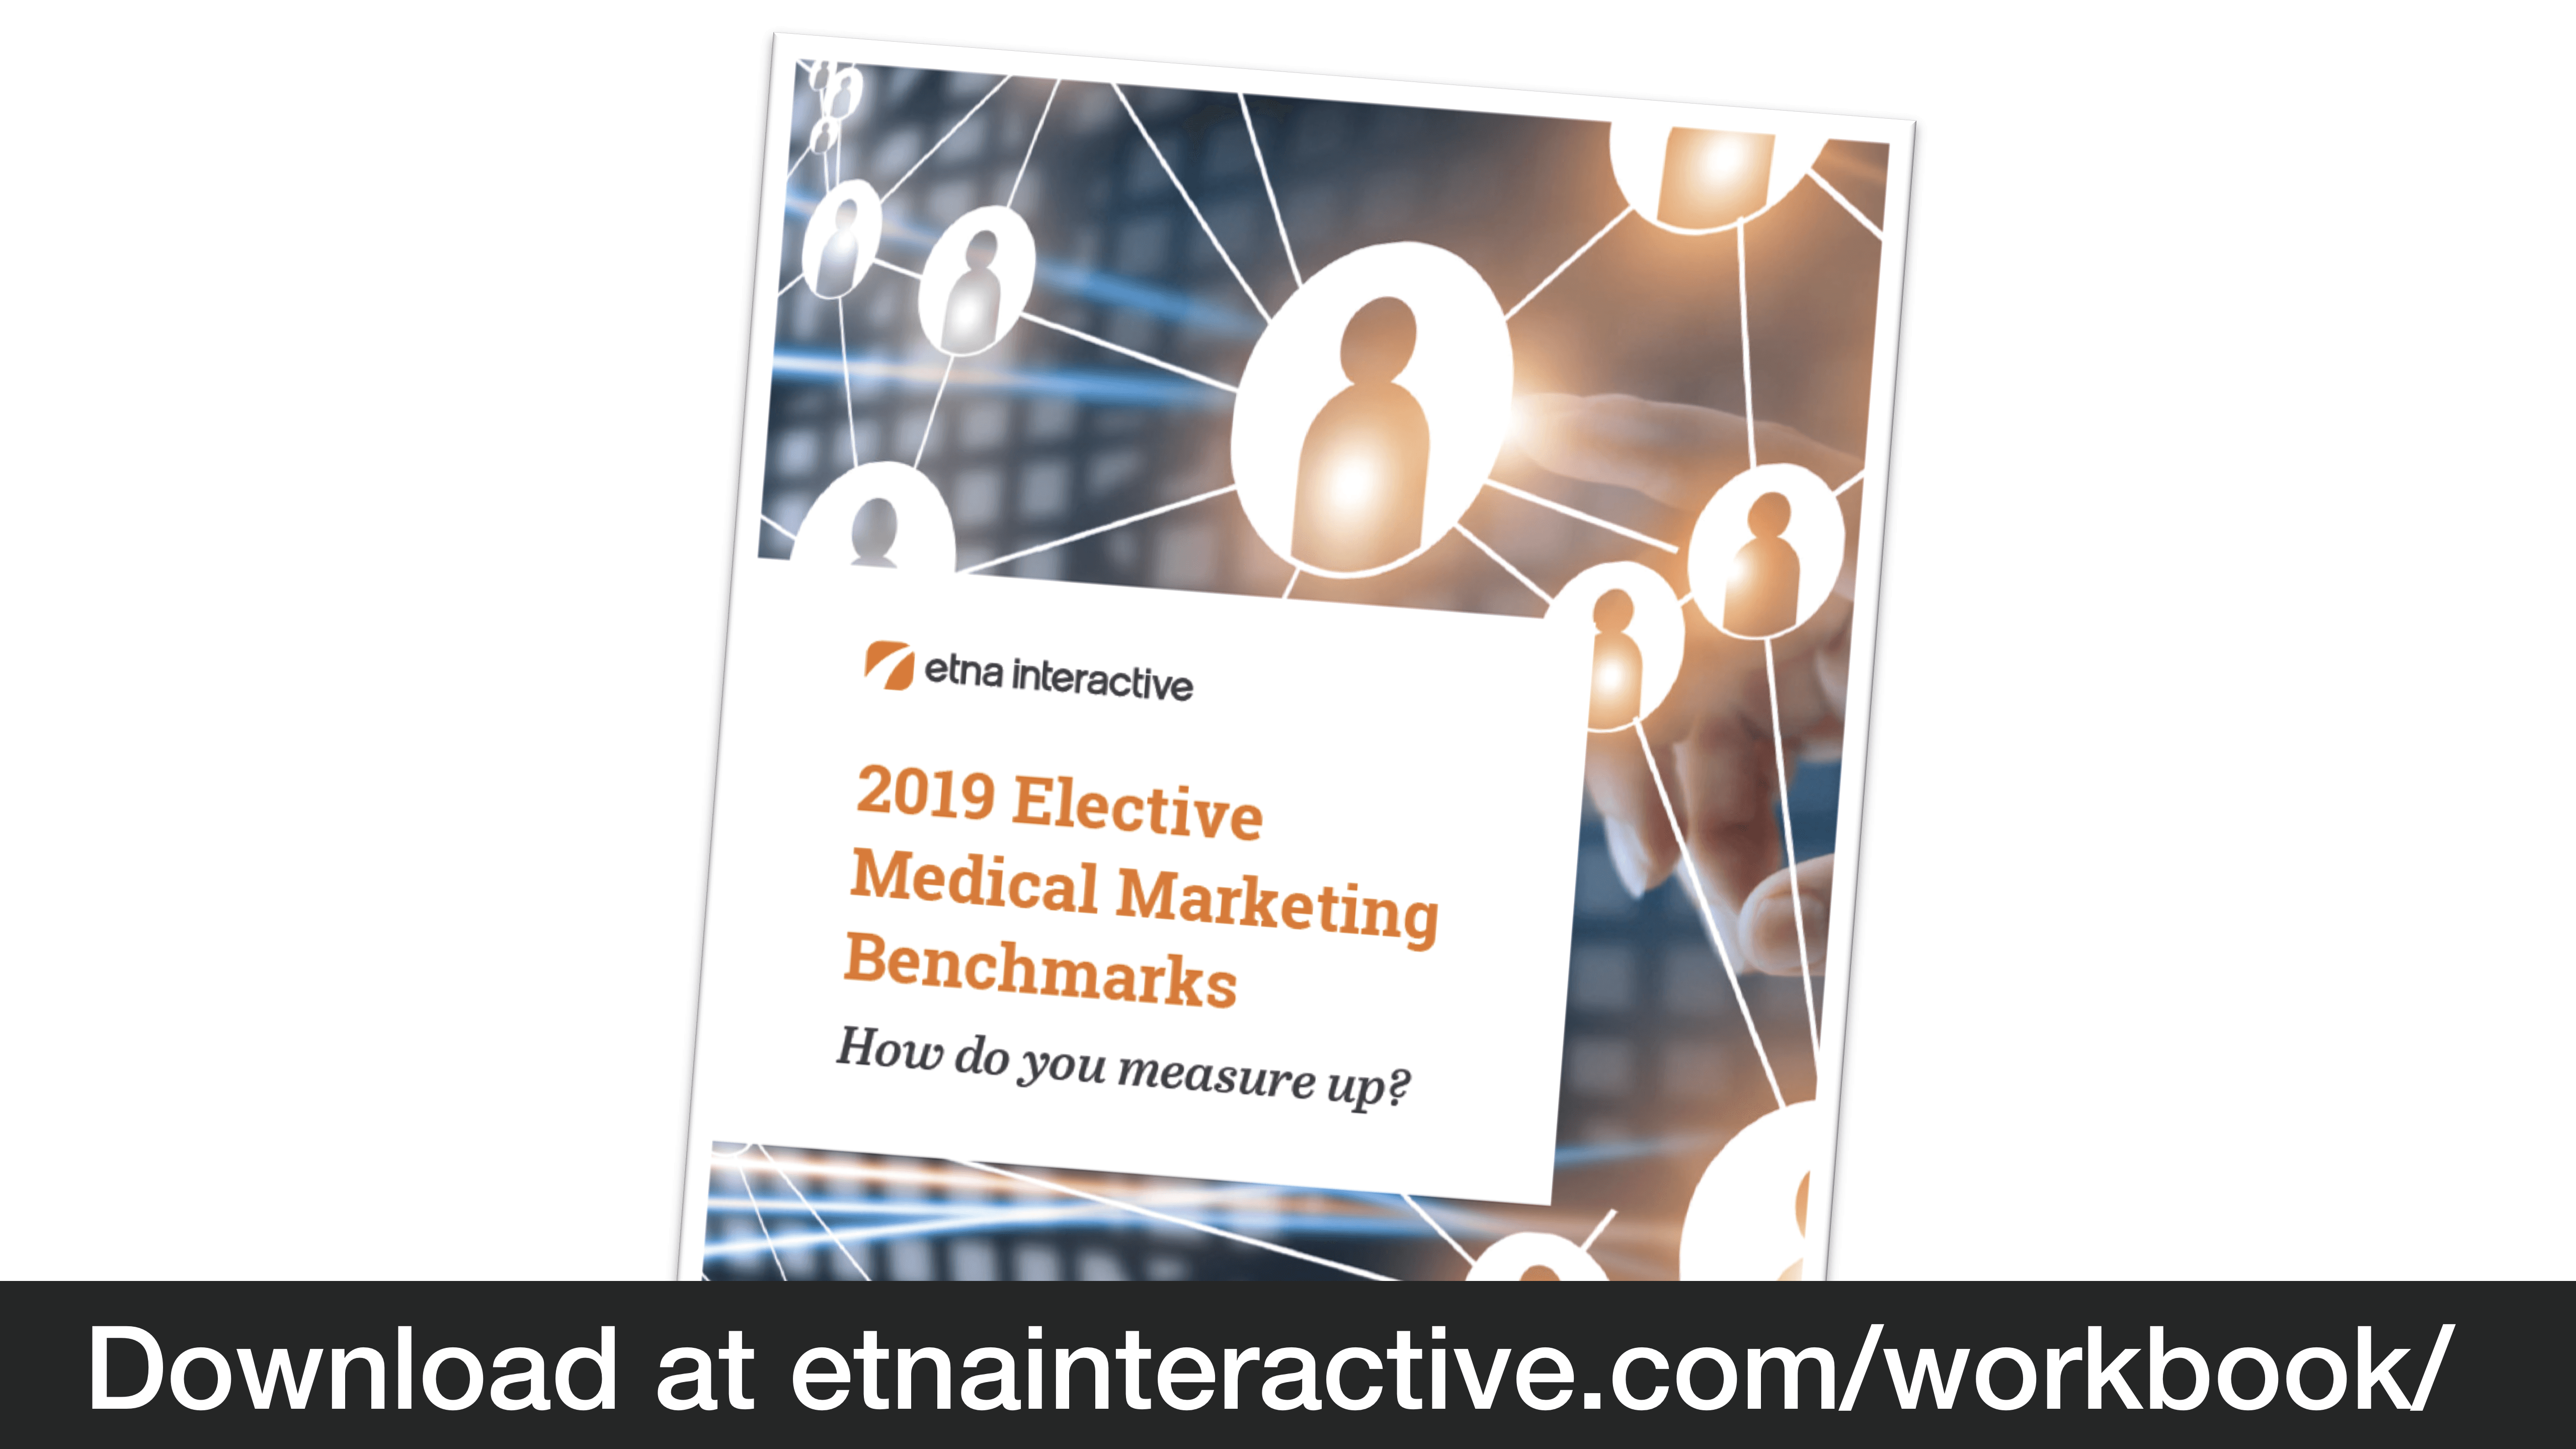 Download our workbook '2019 Elective Medical Marketing Benchmarks'